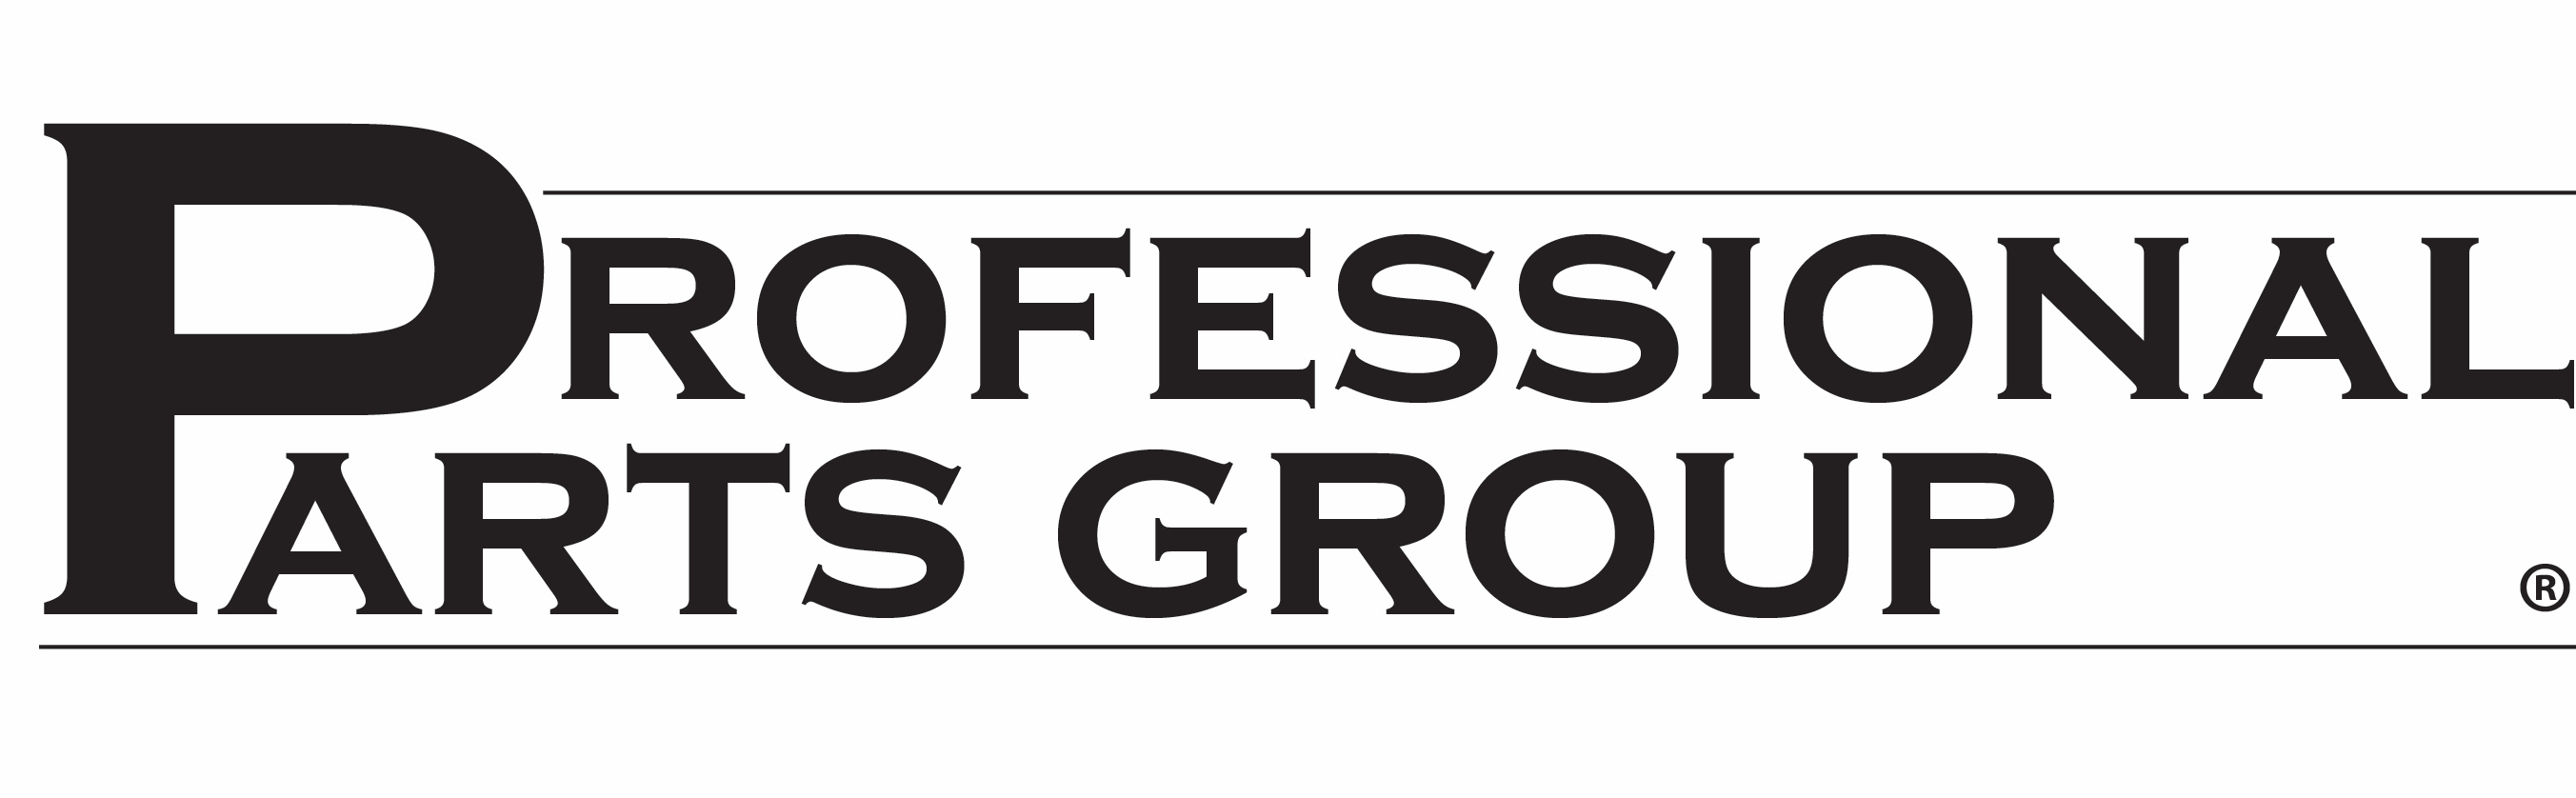 professional parts group Logo